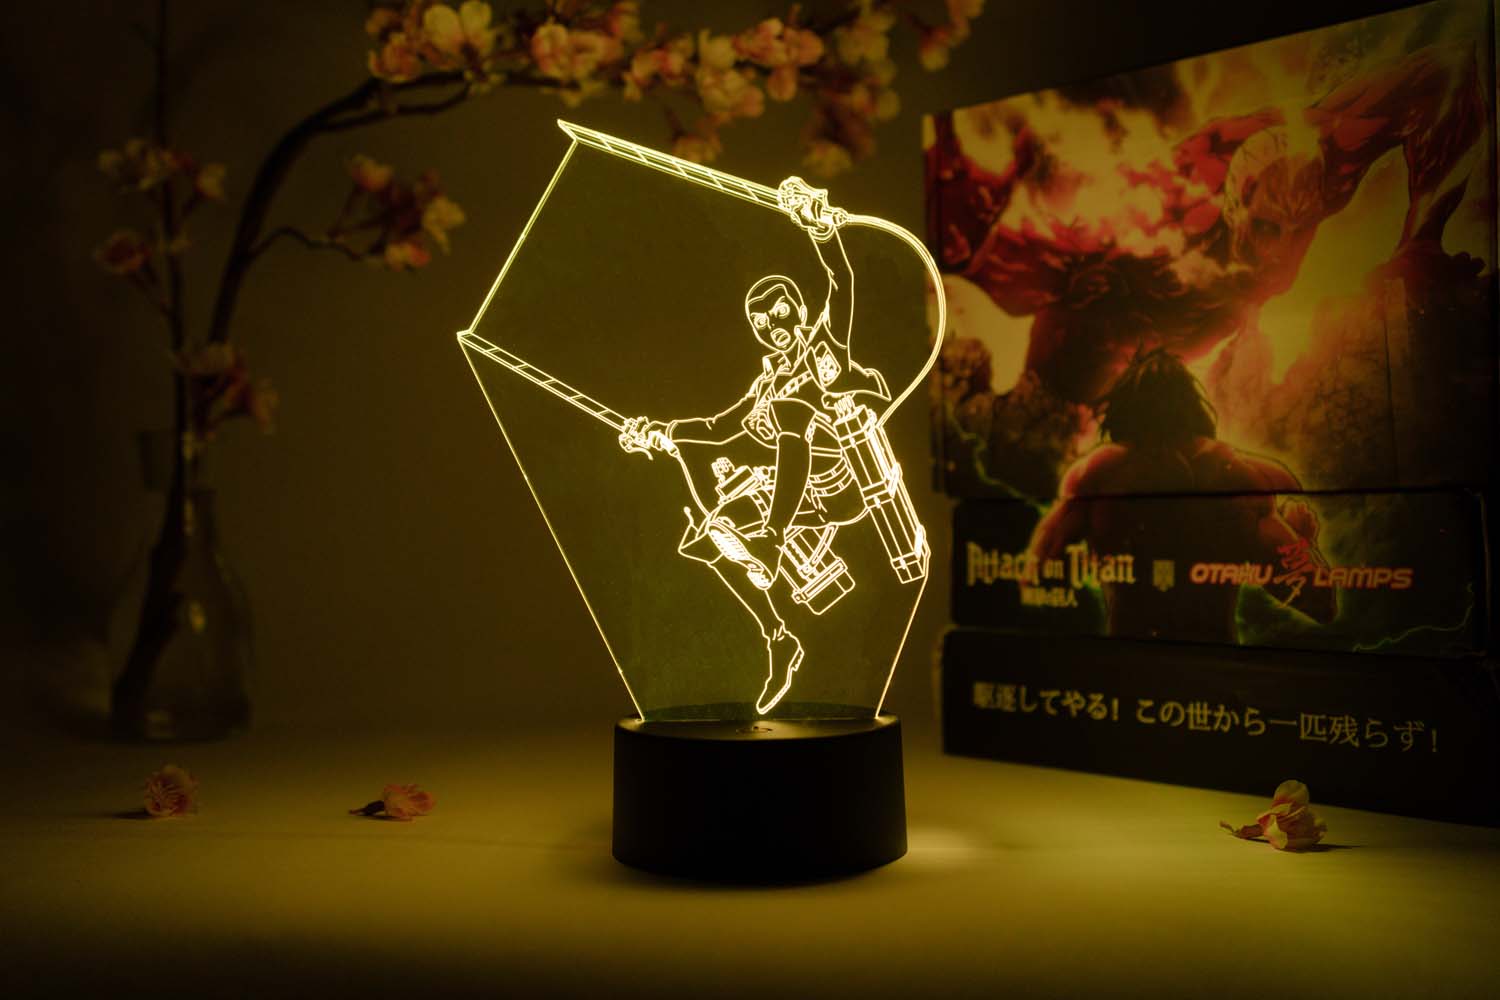 Conny Springer Action Otaku Lamp (Attack on Titan)